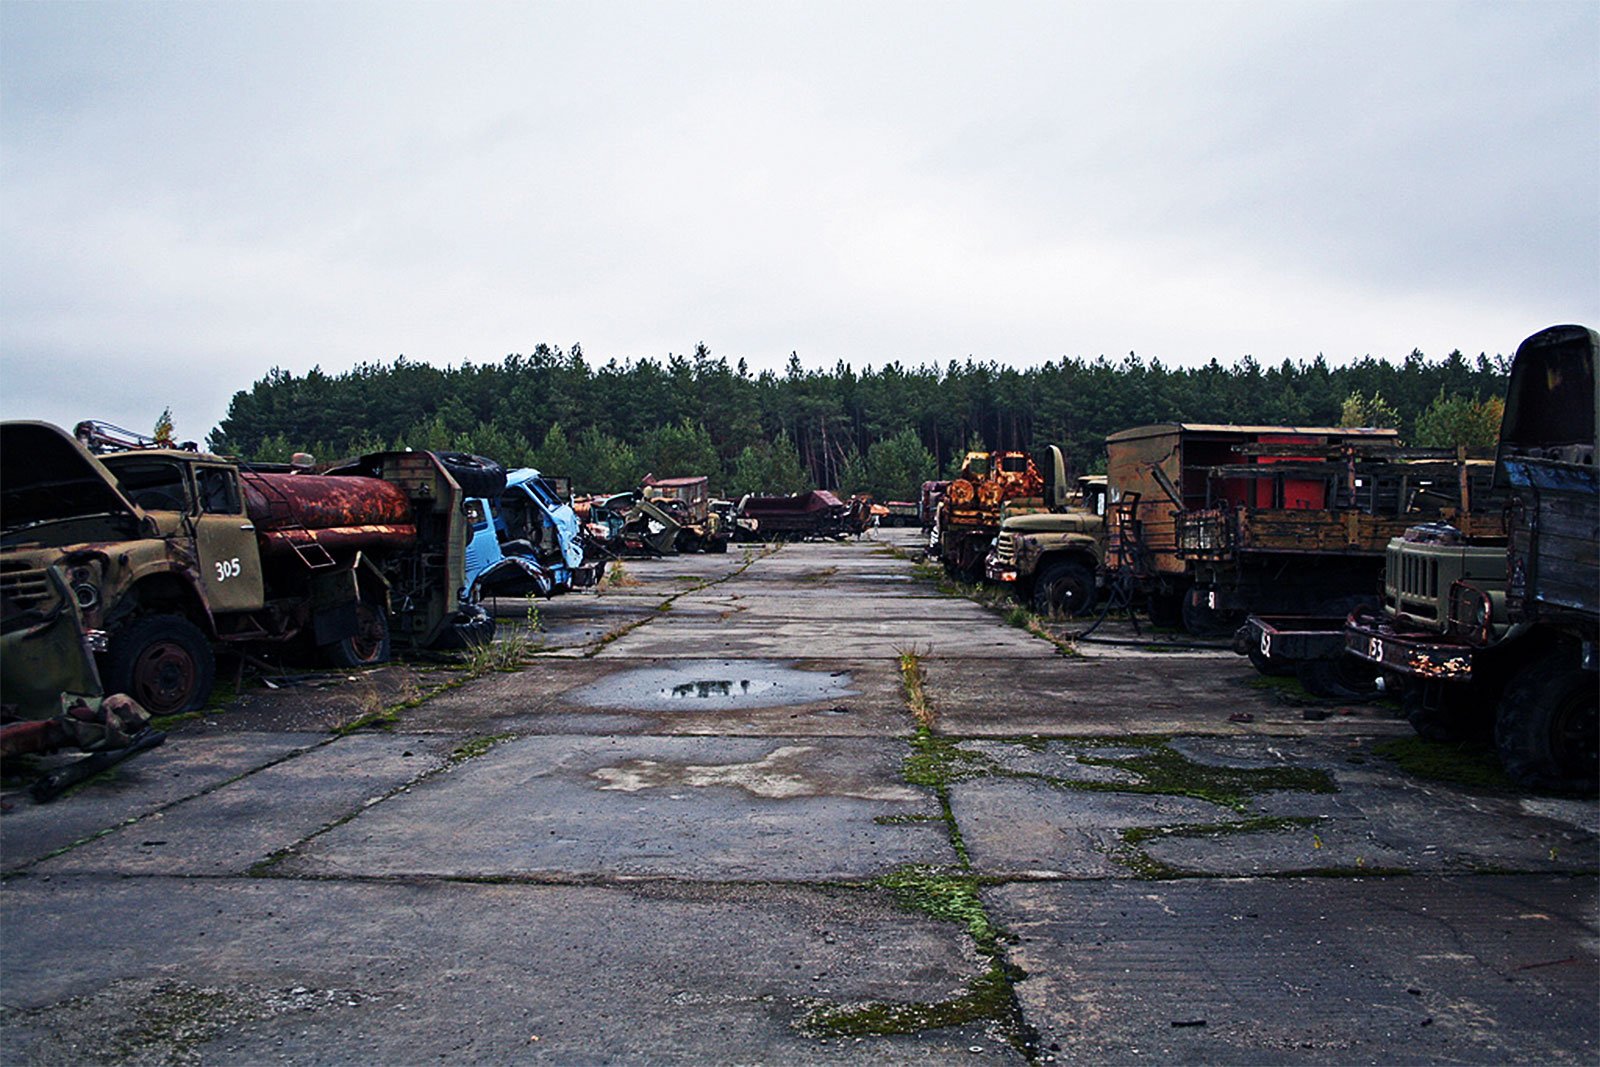 Buryakovka machinery graveyard, Chernobyl